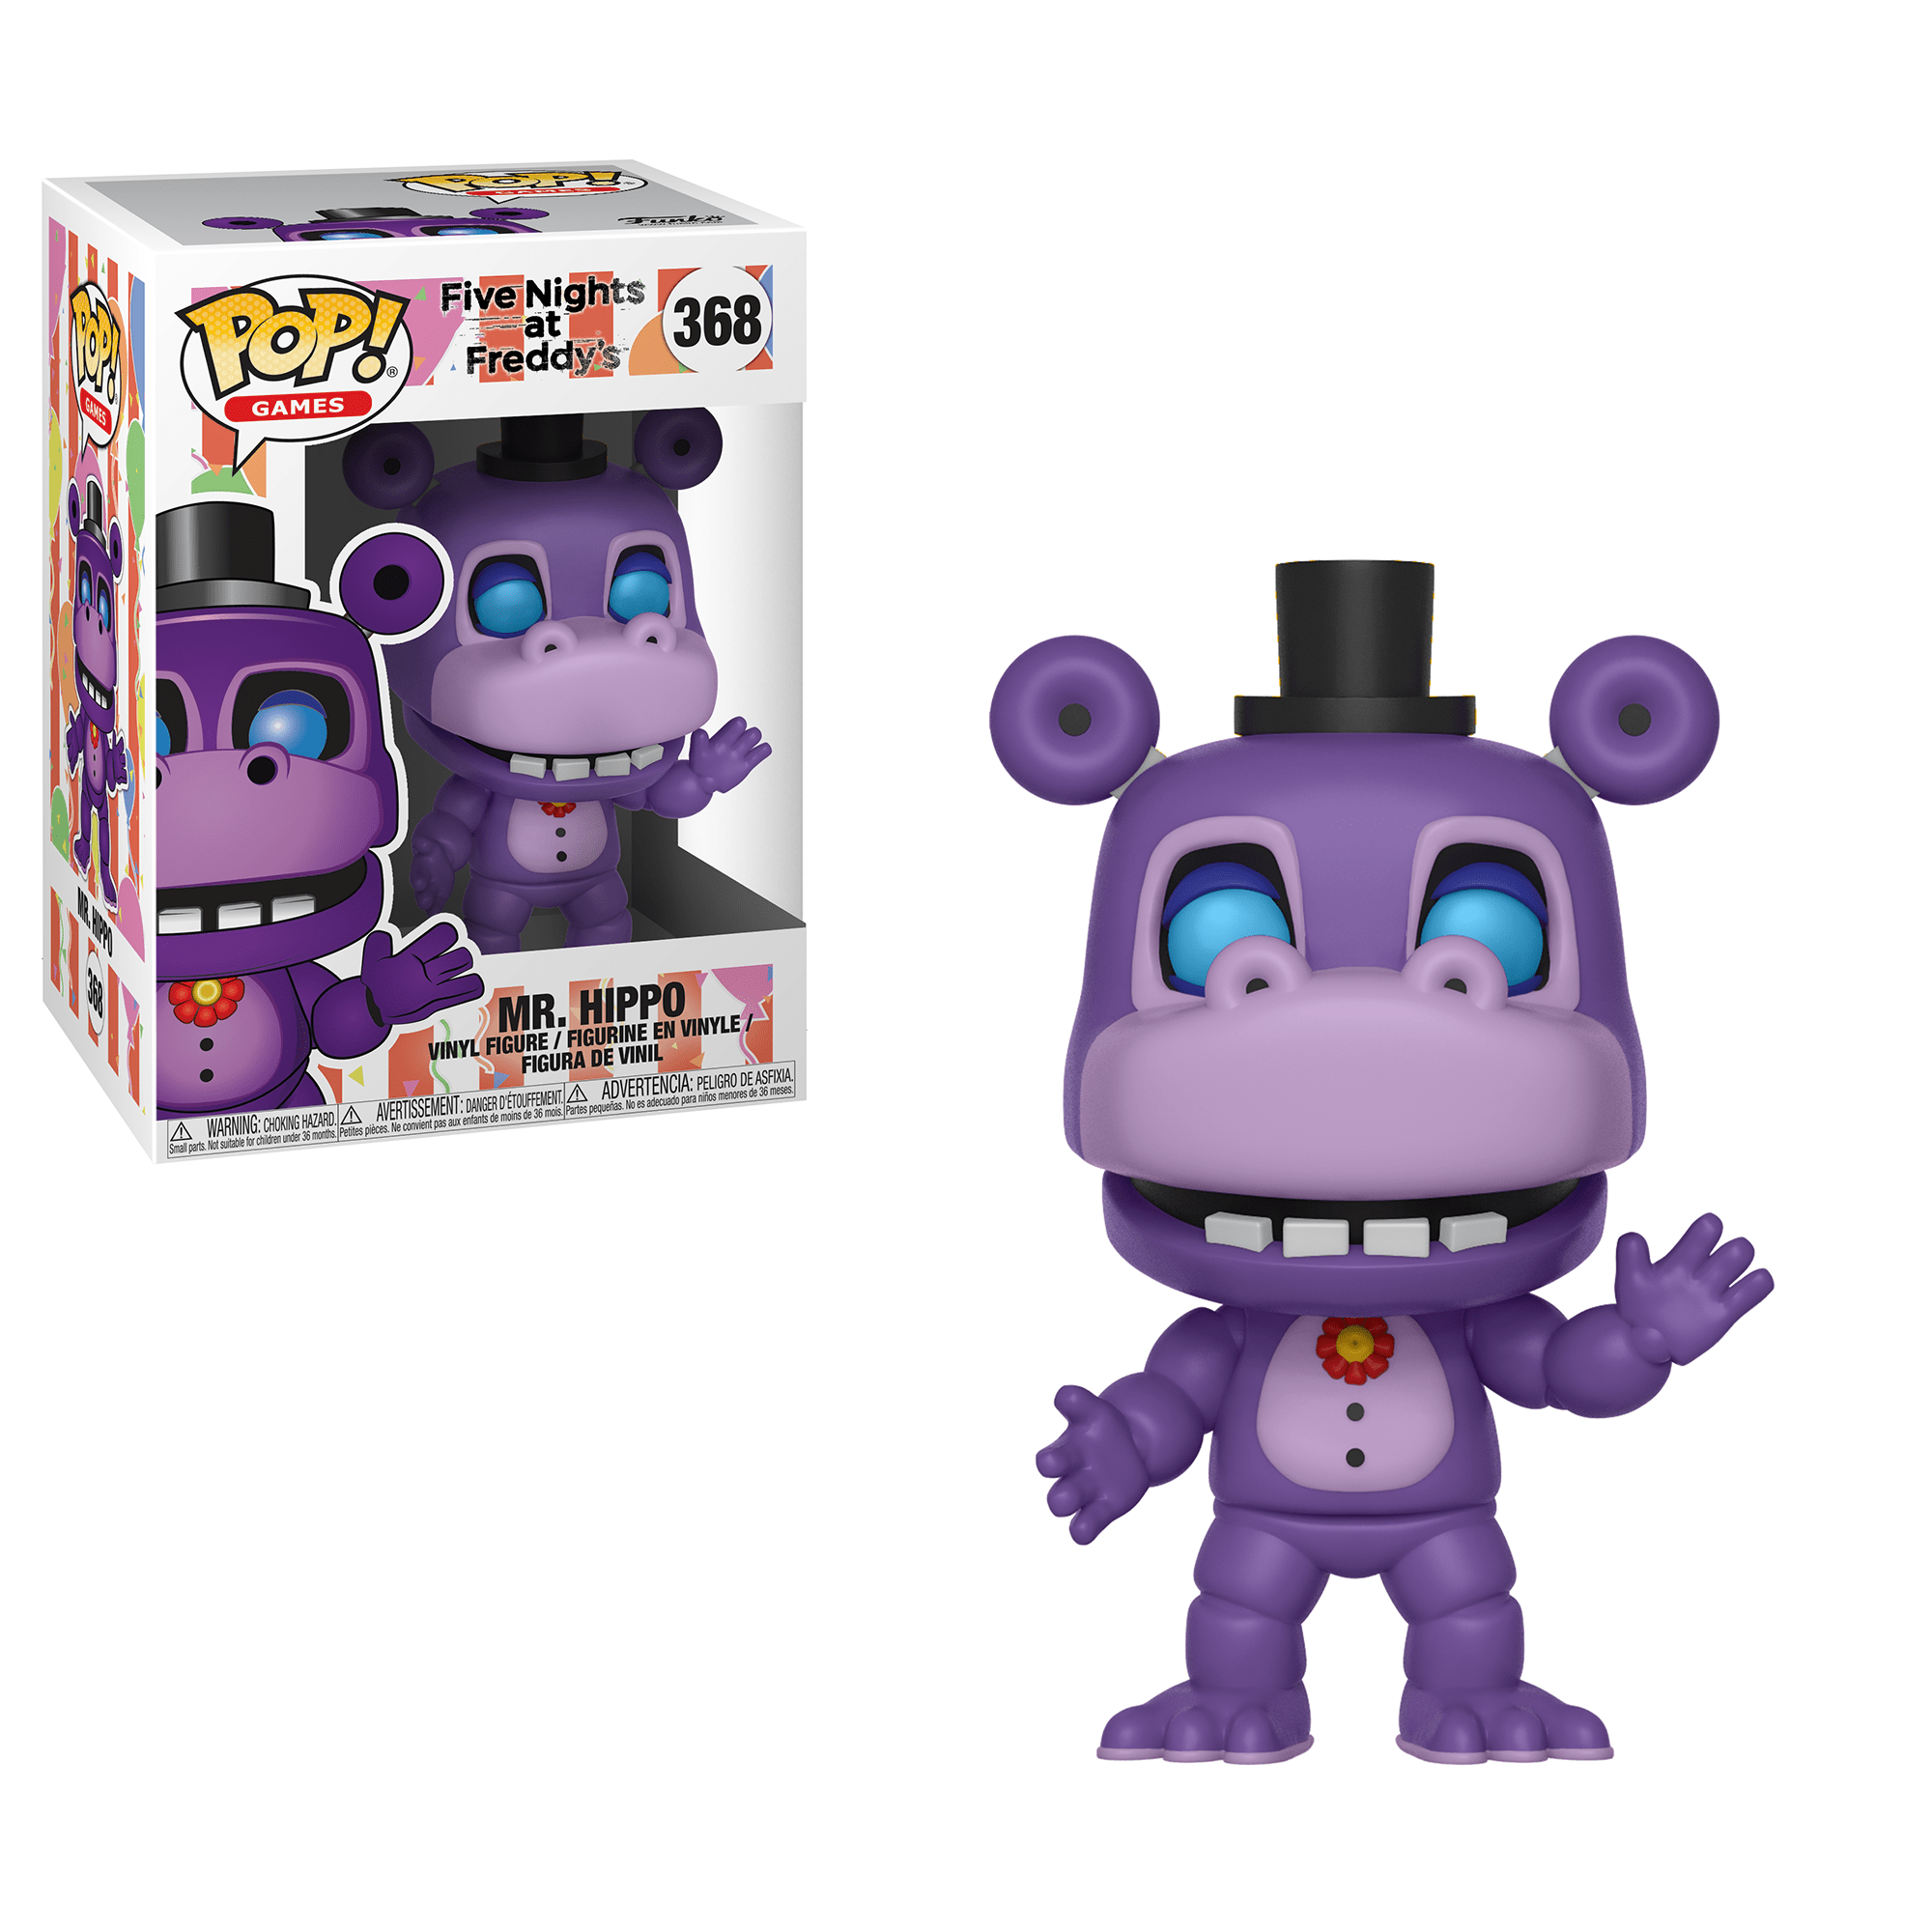 Funko Pop! Mr. Hippo (Five Nights at Freddy's)